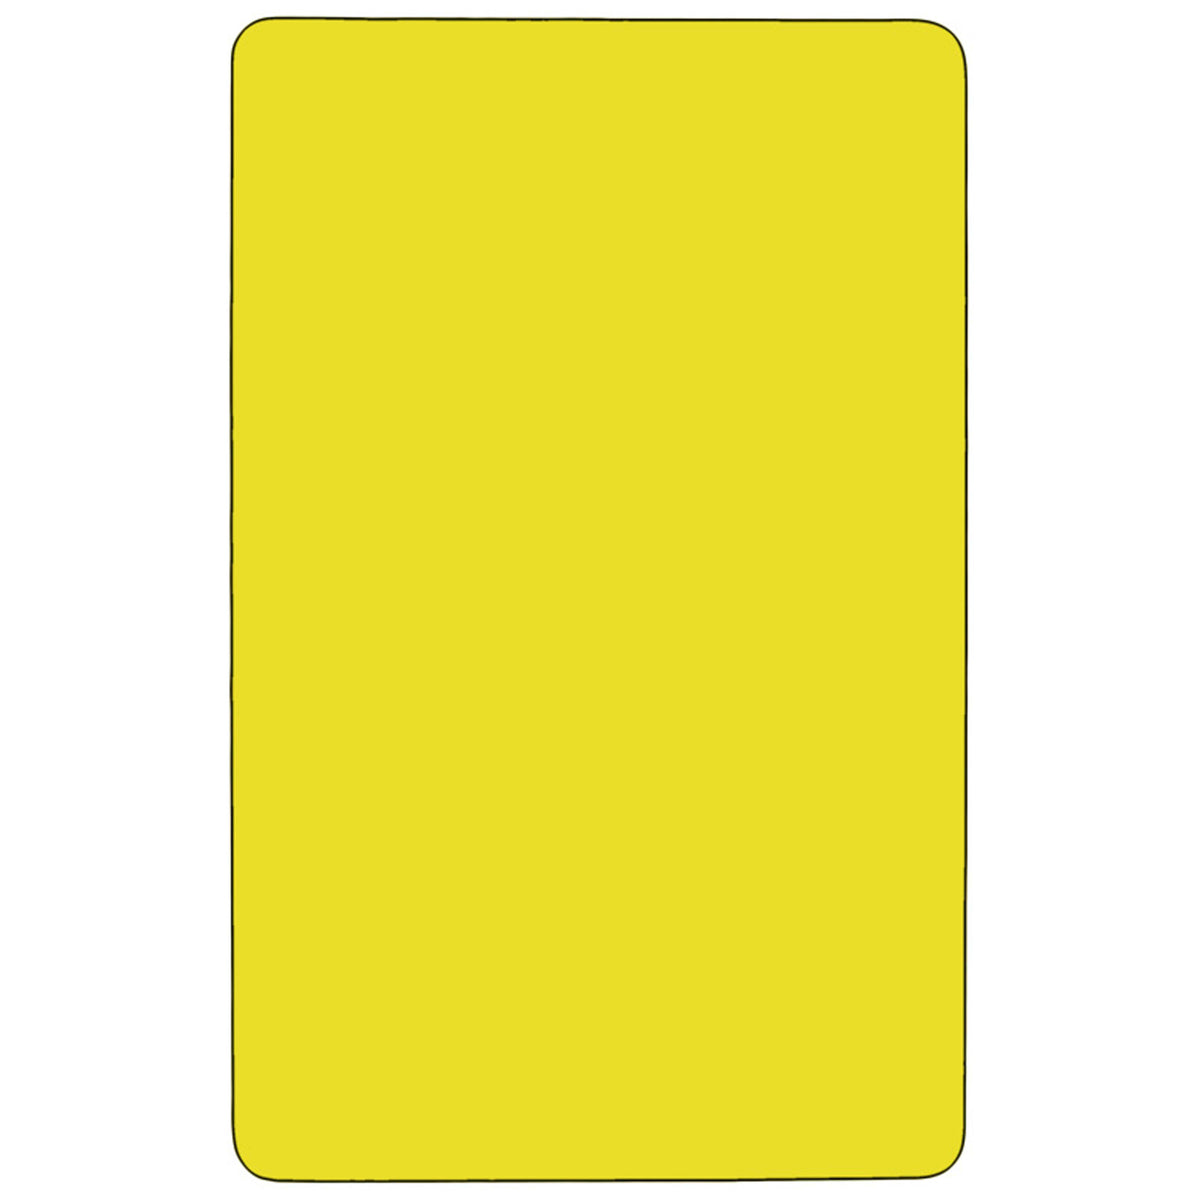 Yellow |#| 24inchW x 48inchL Rectangular Yellow HP Laminate Activity Table - Adjustable Legs